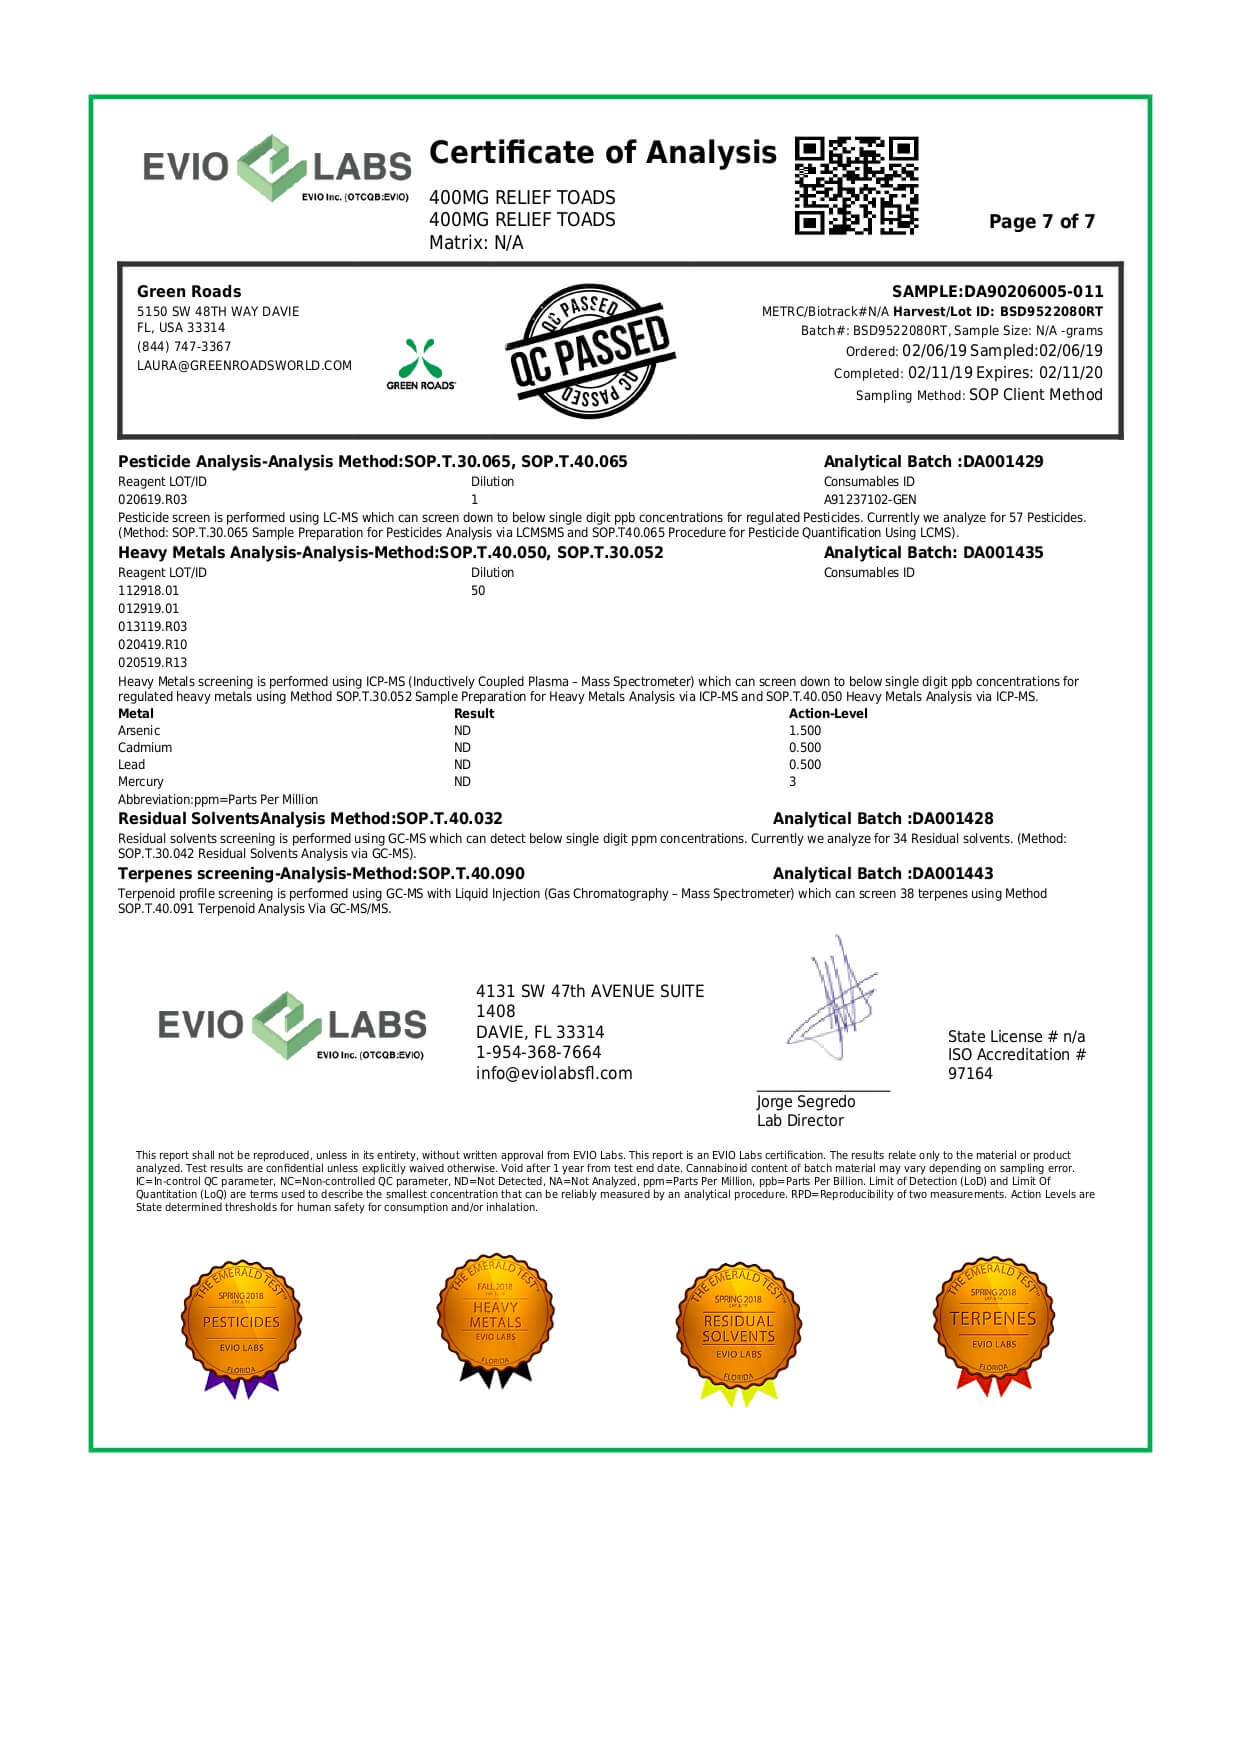 Green Roads CBD Edible Relief Toads 400mg Lab Report